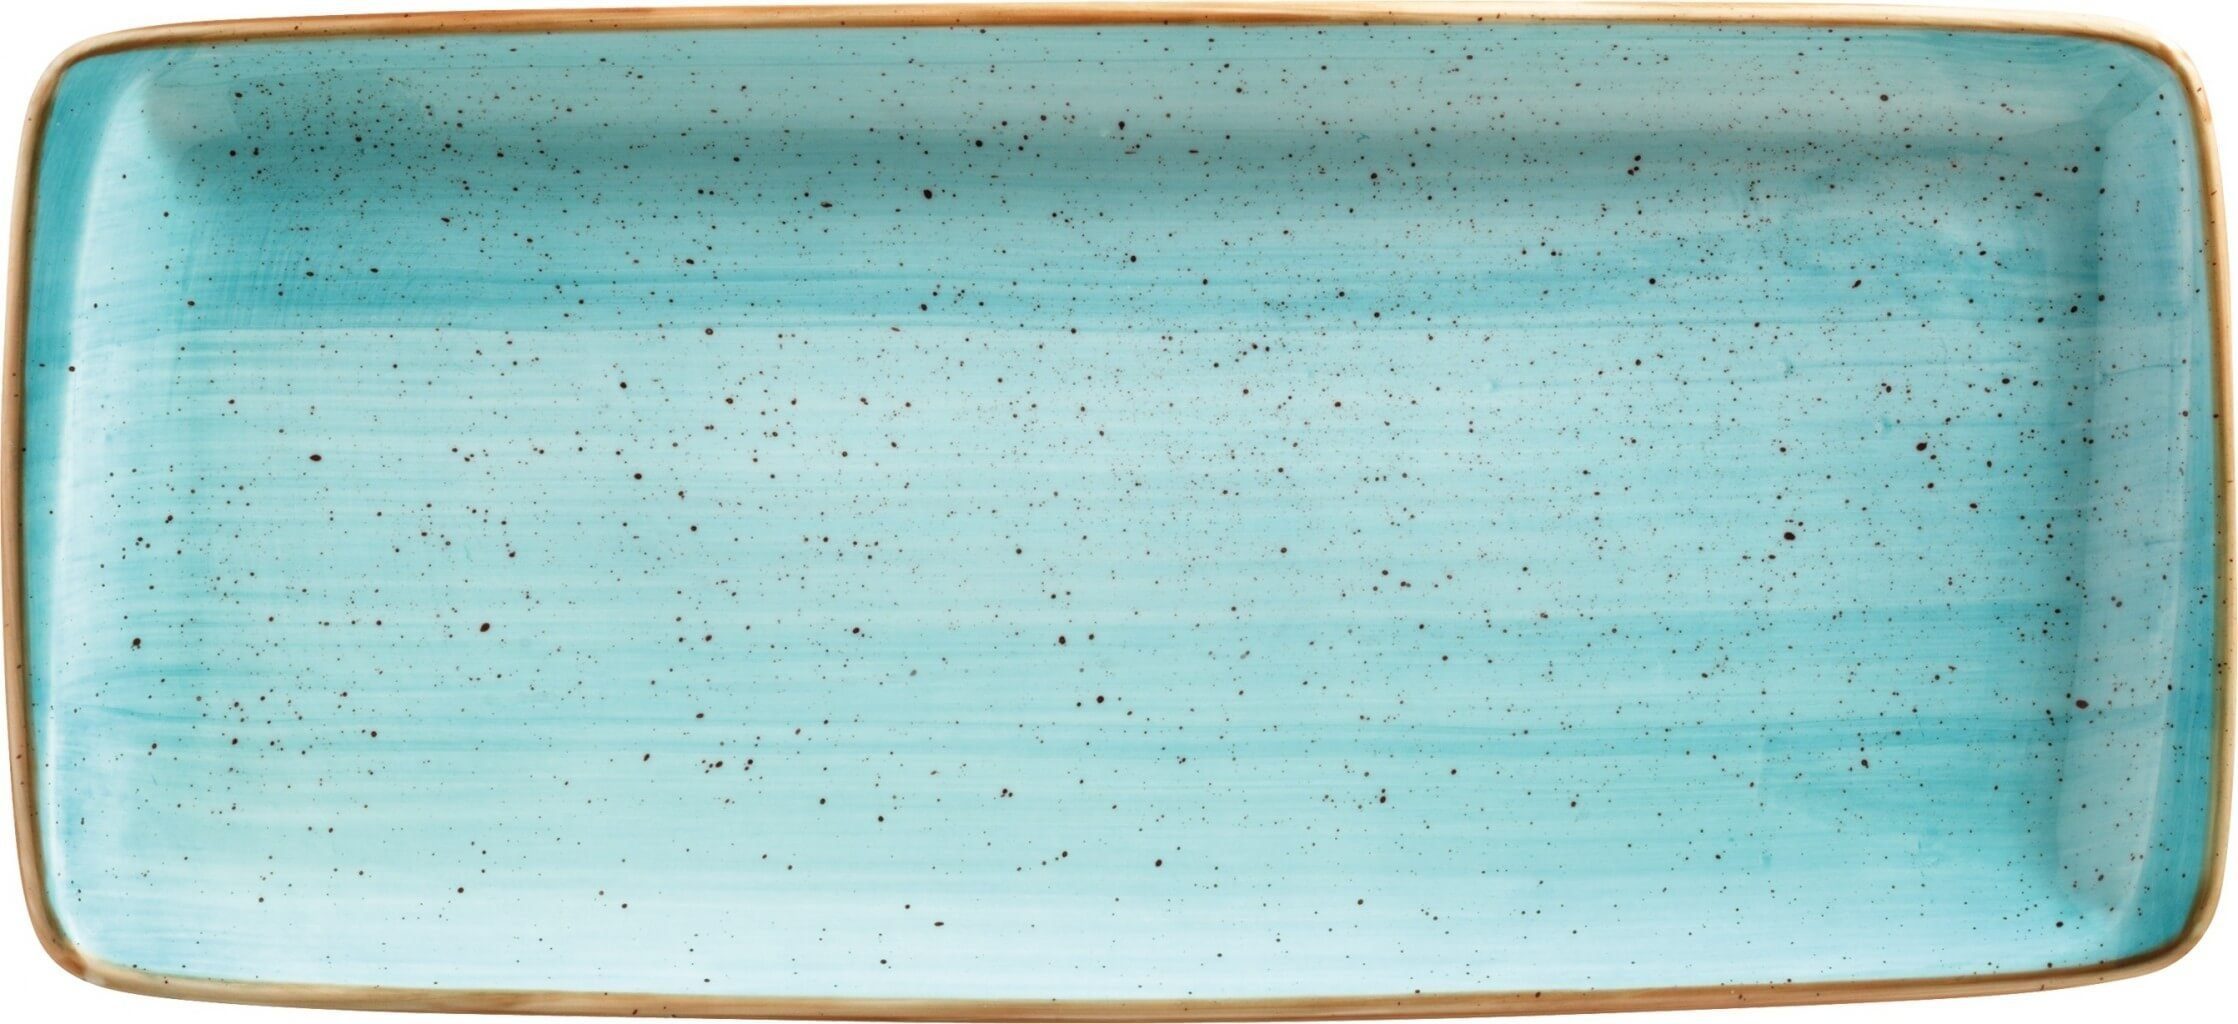 Aqua Servierplatten, Servierplatte Aura Moove Porzellan, Türkis (2-tlg), AAQMOV35DT Bonna 2,5cm 34x16cm